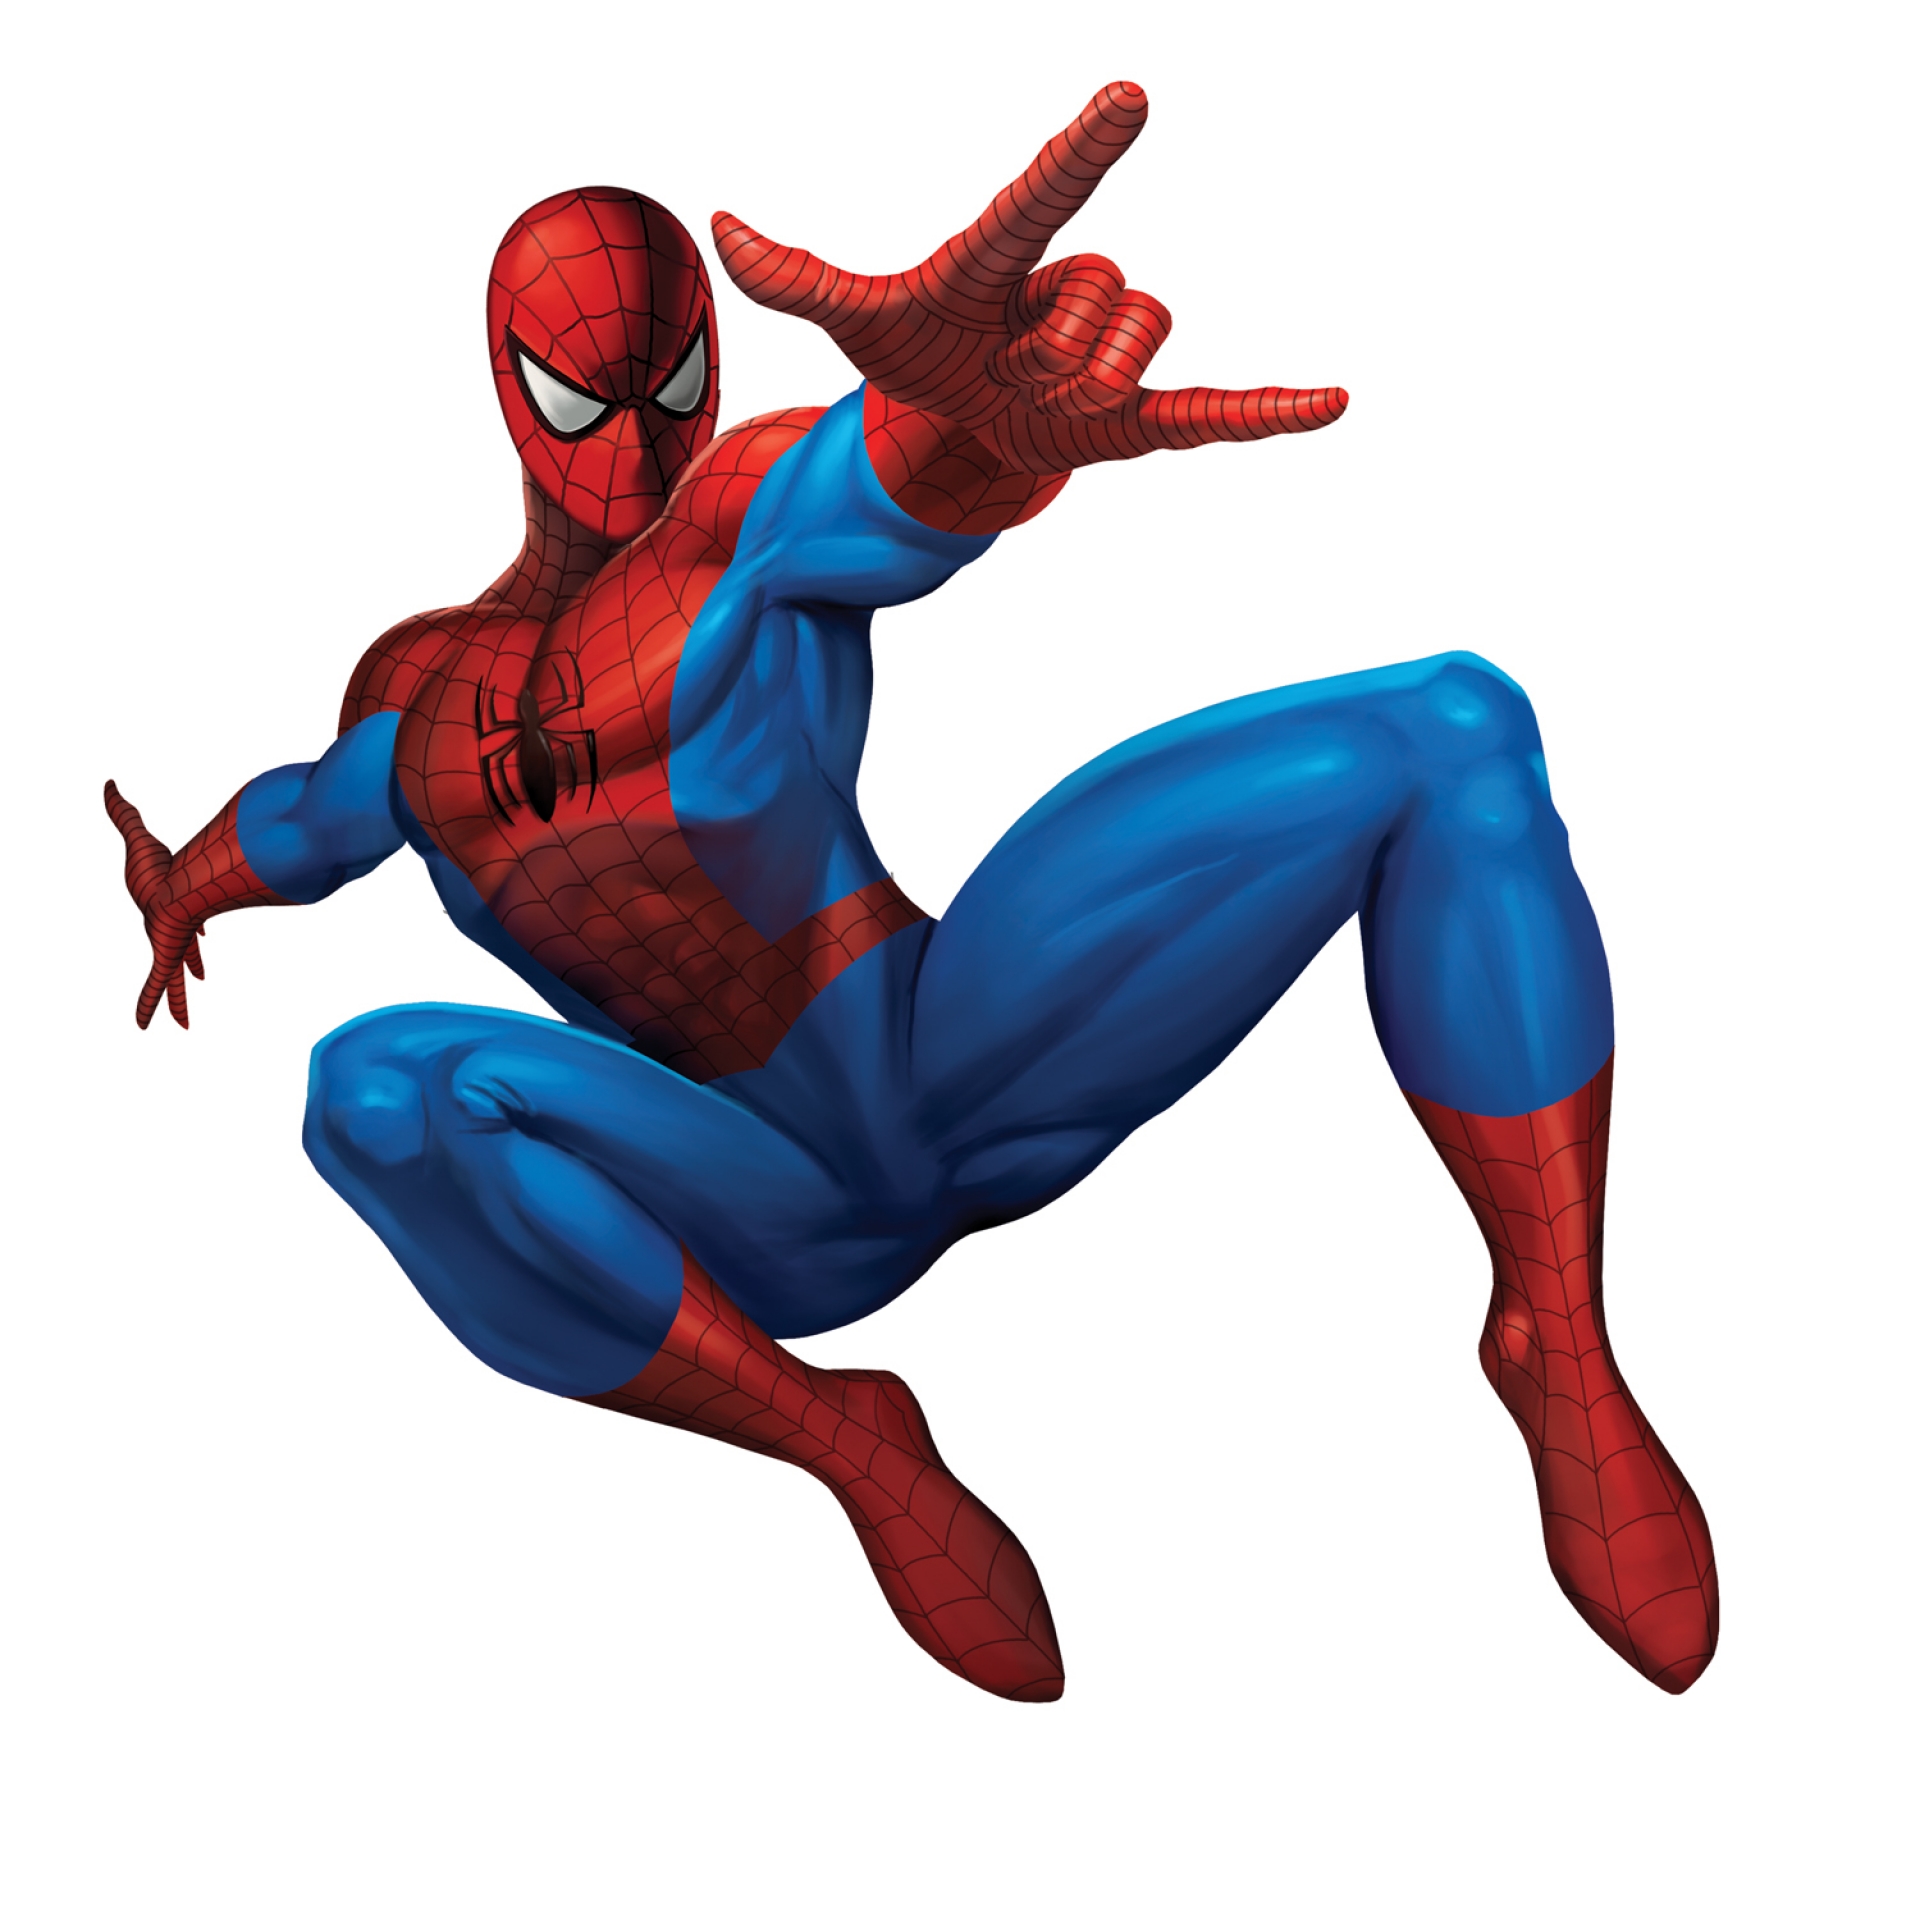 Spiderman cartoon images hd wallpapers widescreen in movies jpg